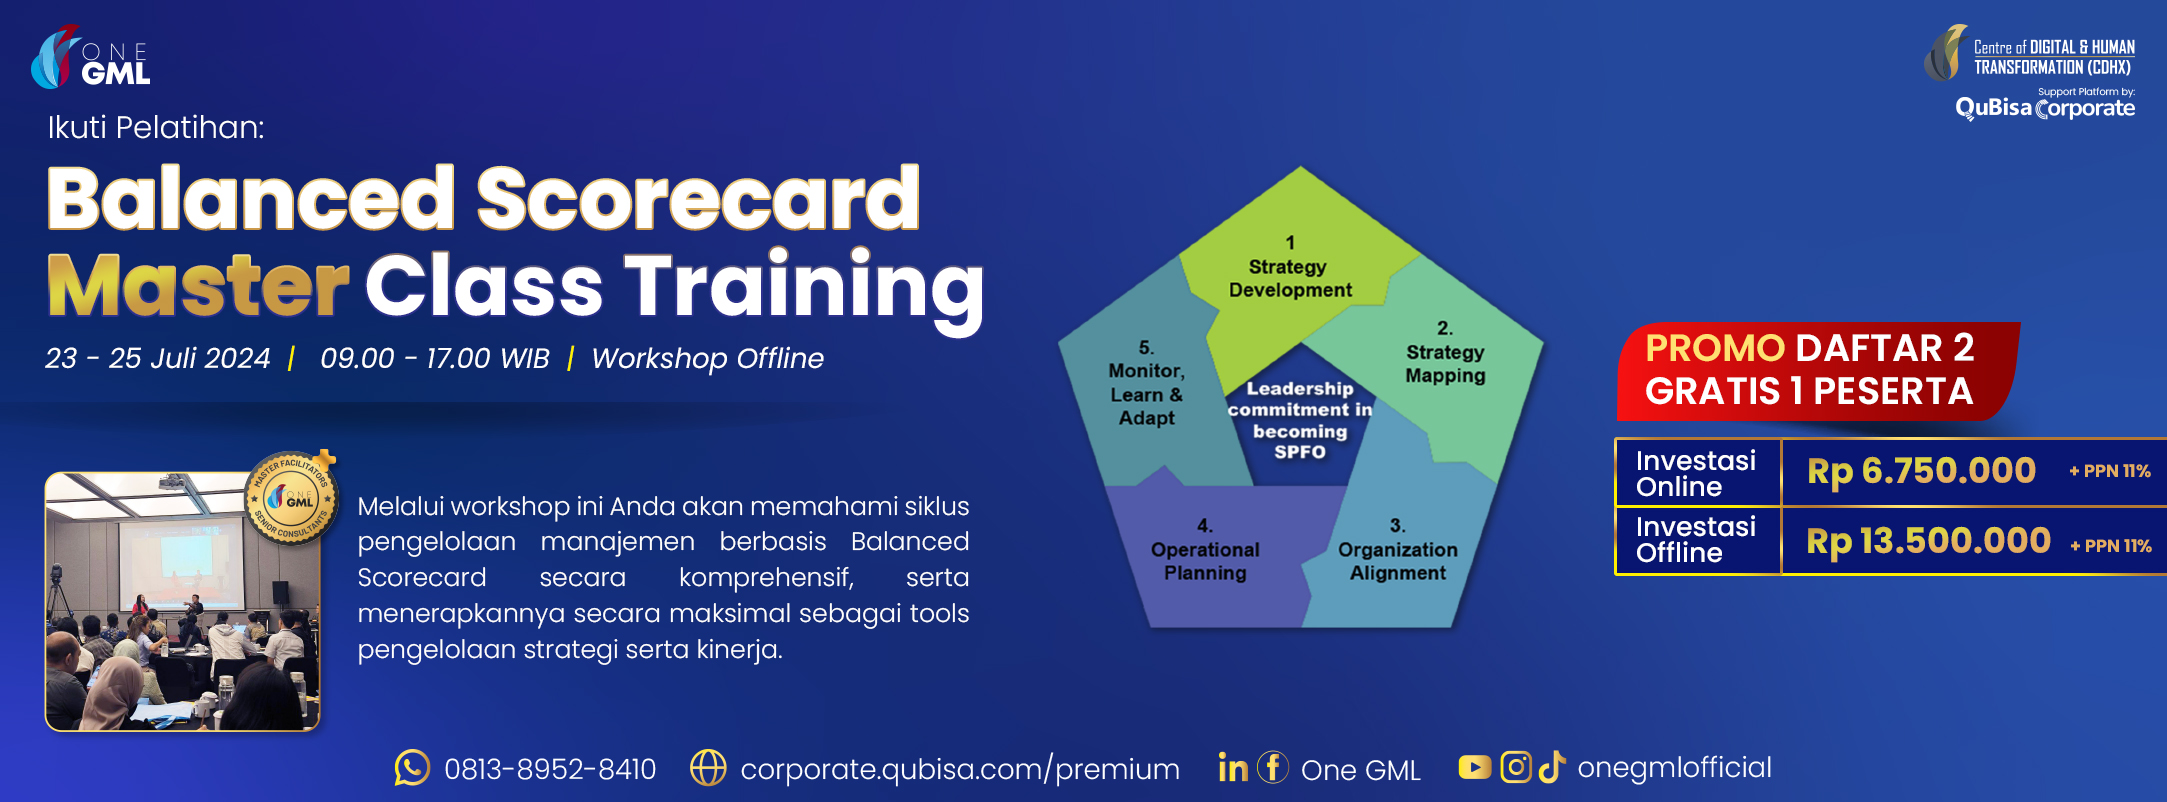 04. Balanced Scorecard Master Class Training LANDSCAPE.jpg